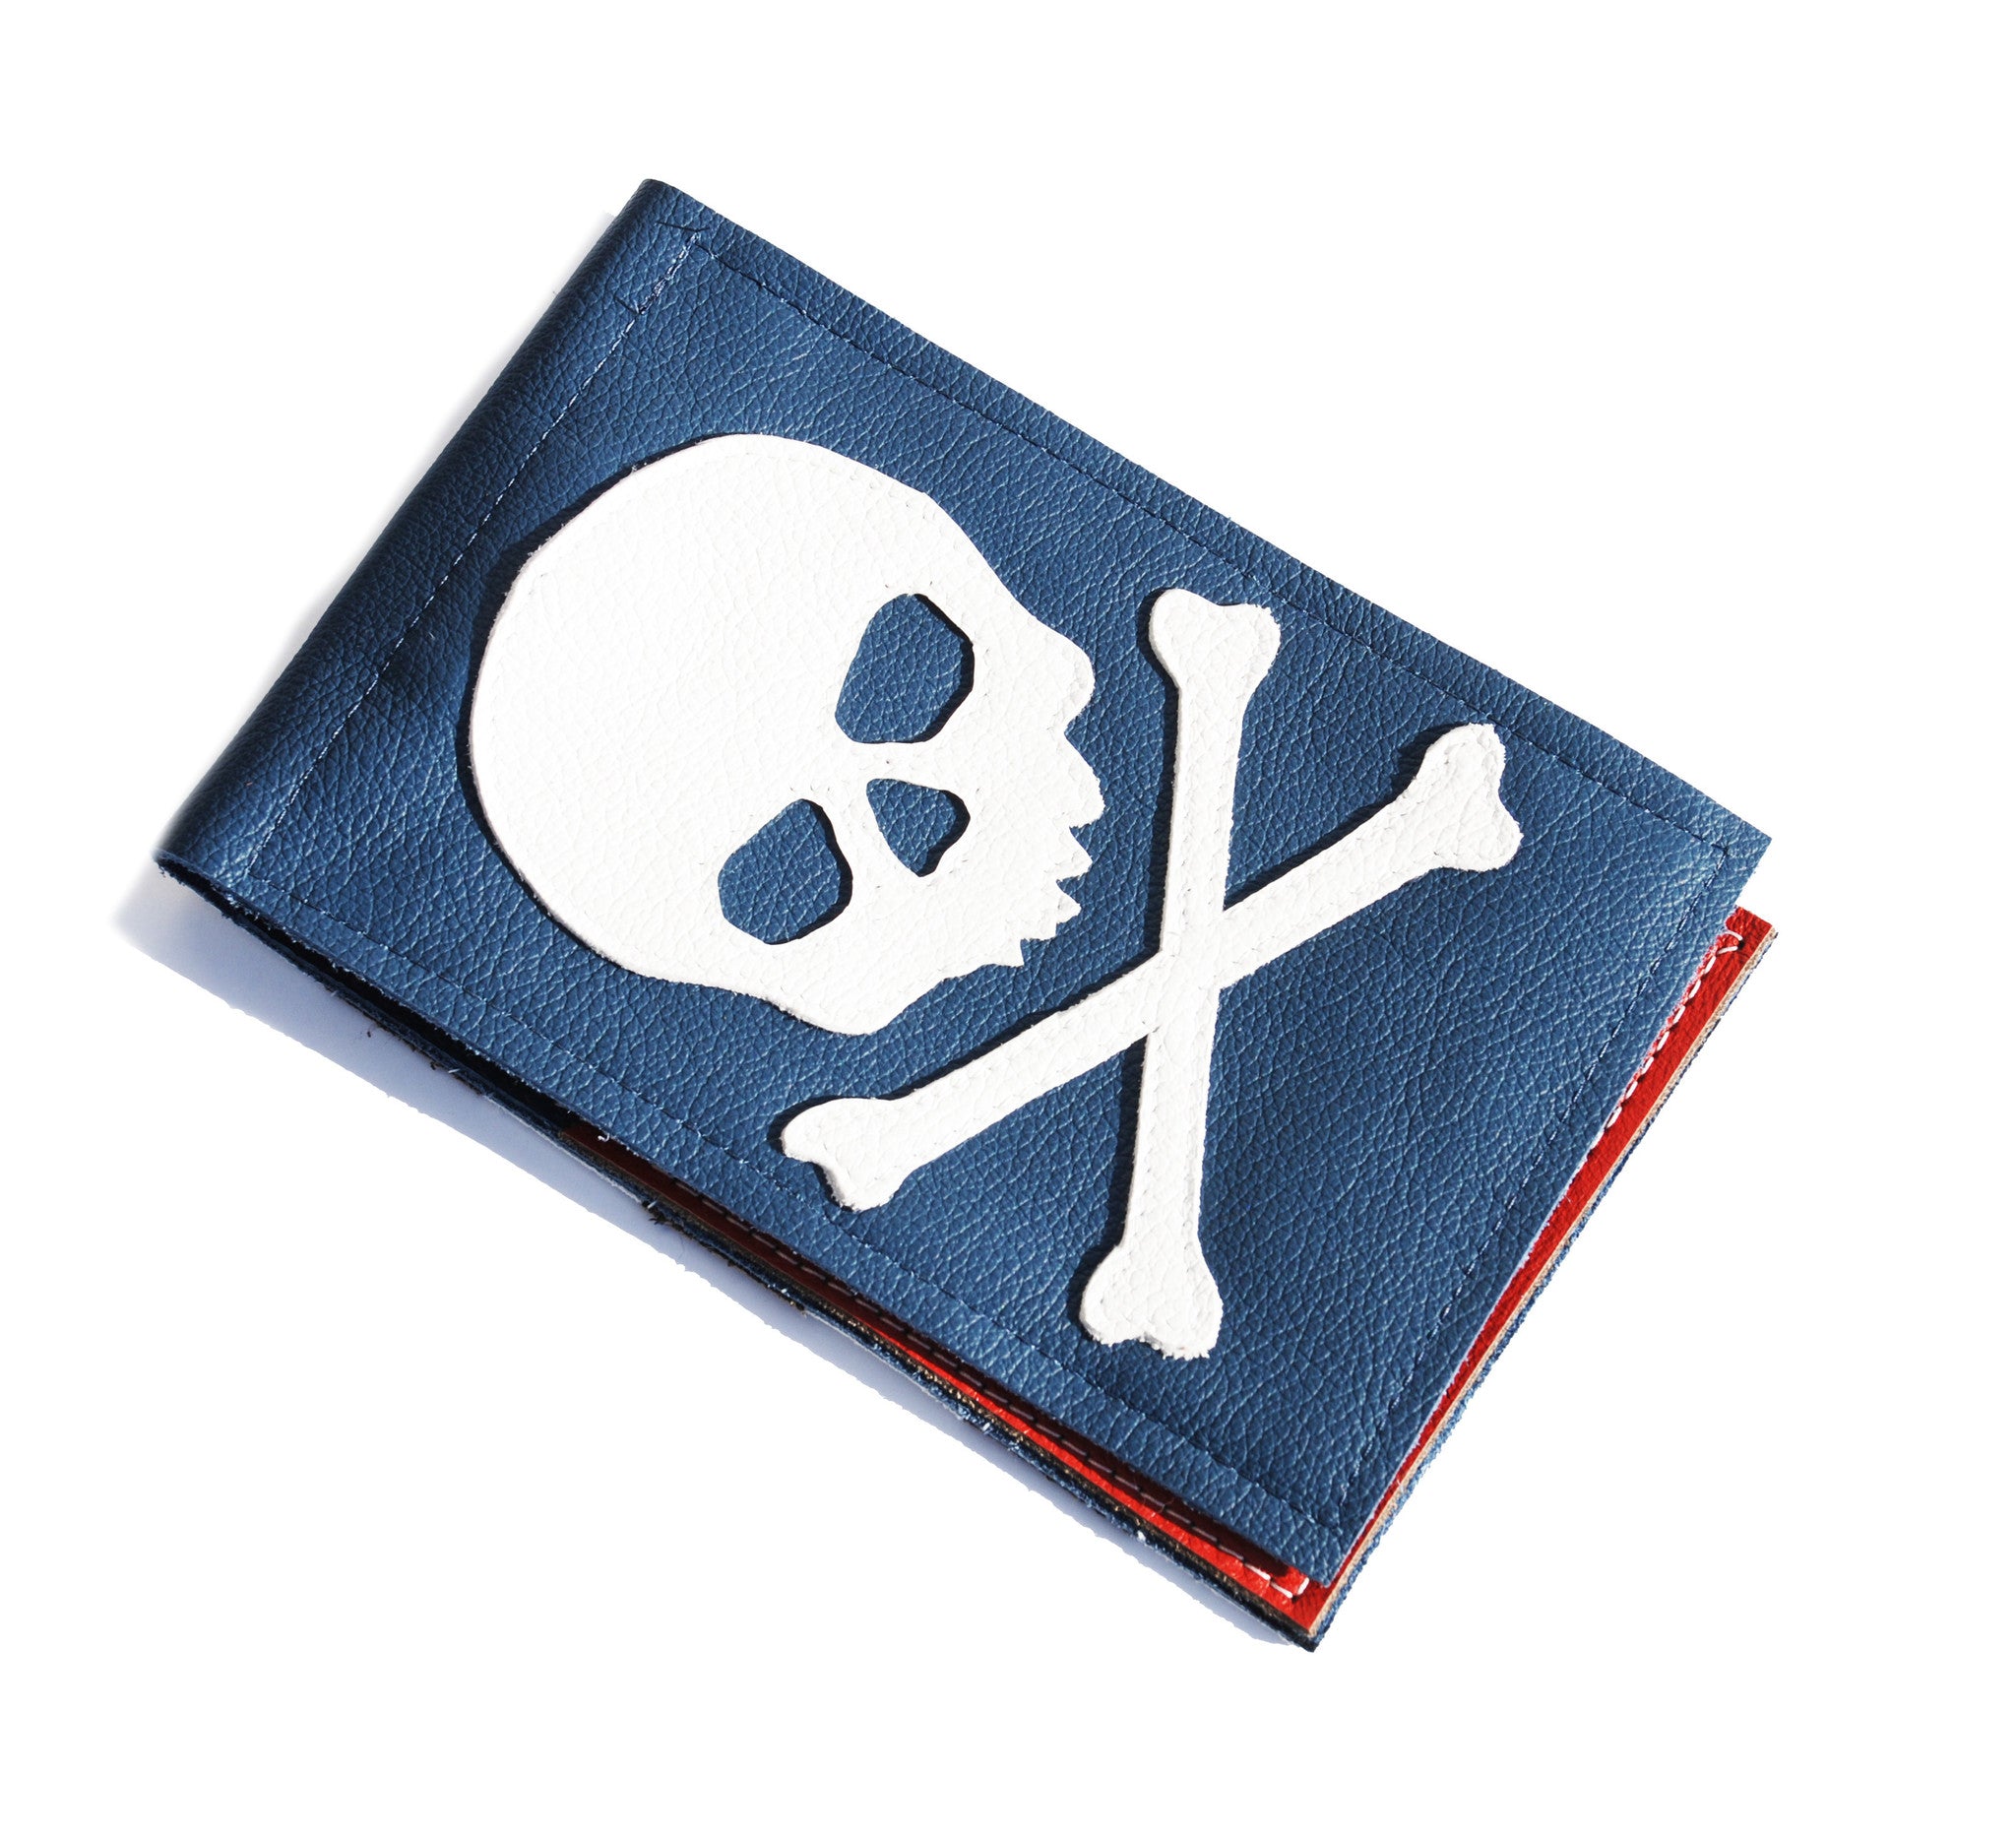 RMG USA Skull & Bones Scorecard Holder - Robert Mark Golf